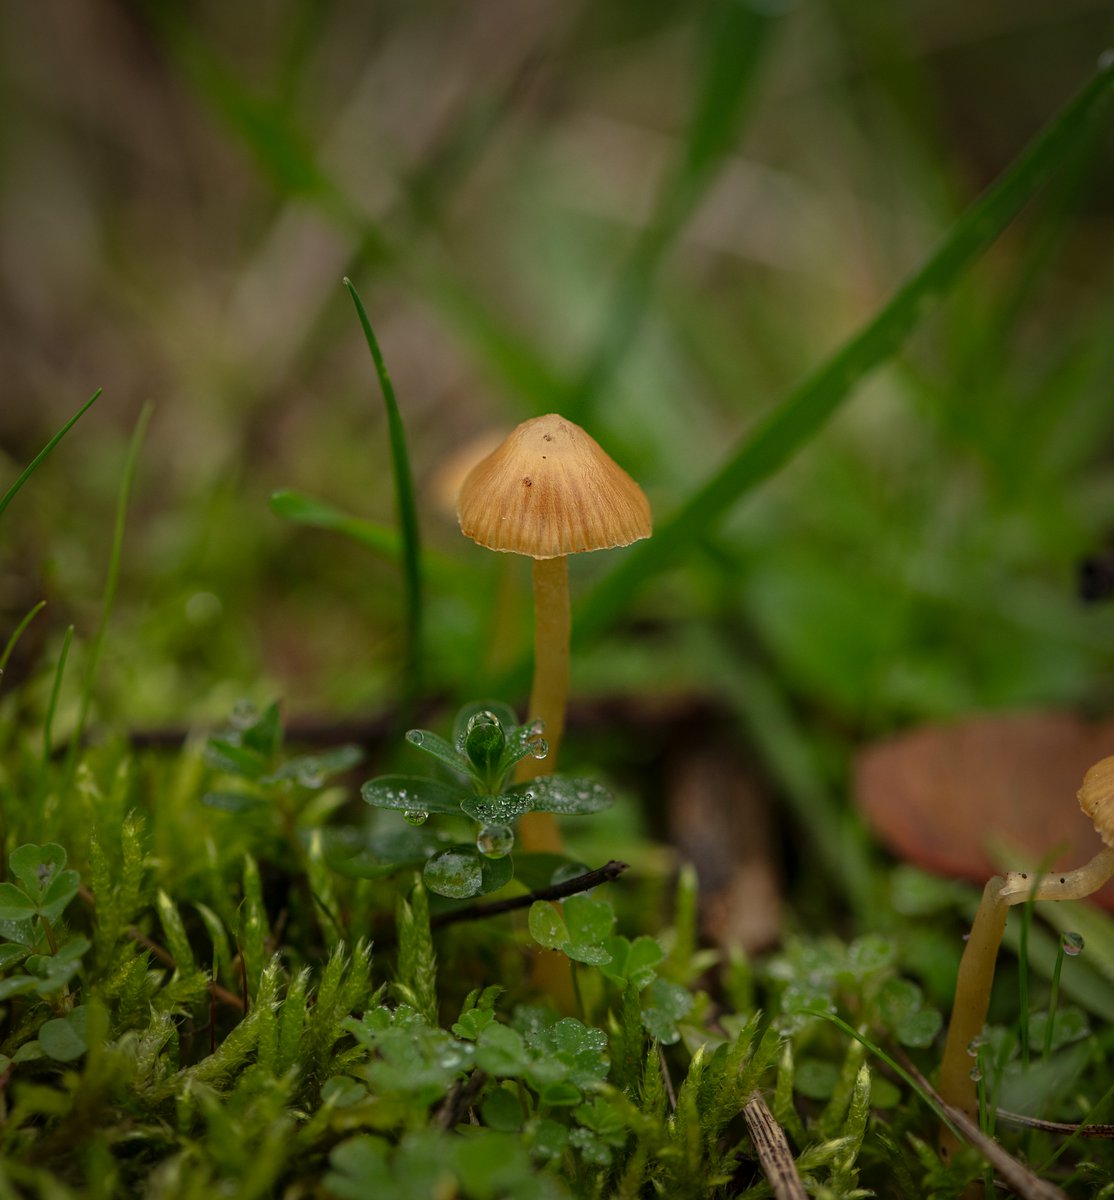 Here's some handsome LBMs (little brown mushrooms) for your #MushroomMonday 🤎🍄🤎
#fungi #mushrooms #pnw #washington #macro